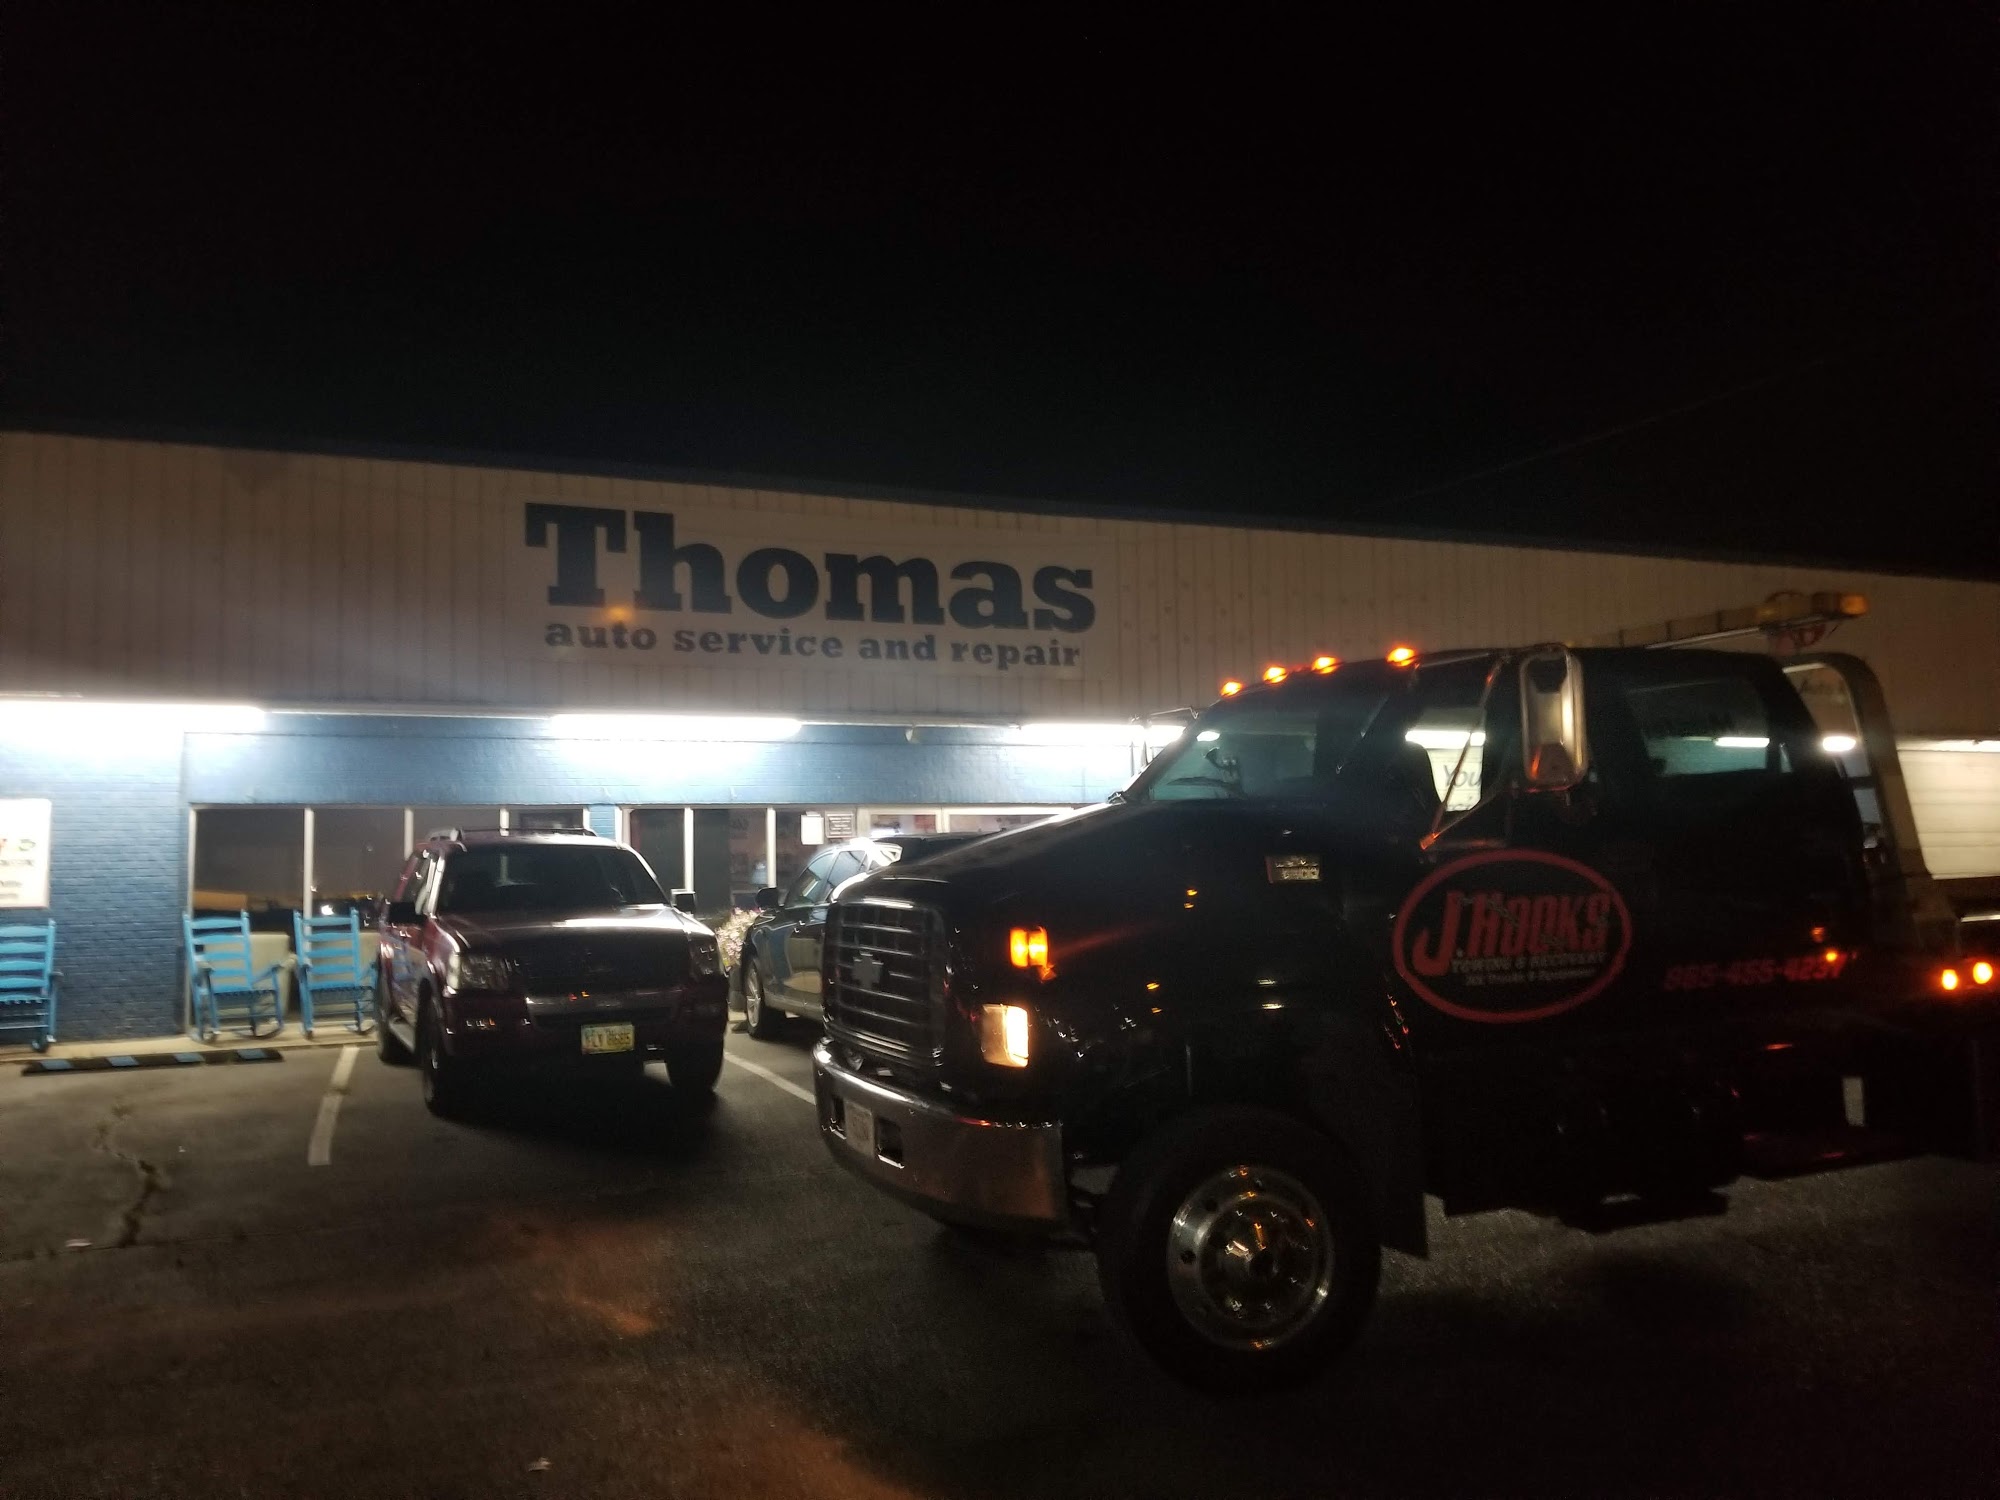 Thomas Auto Service and Repair